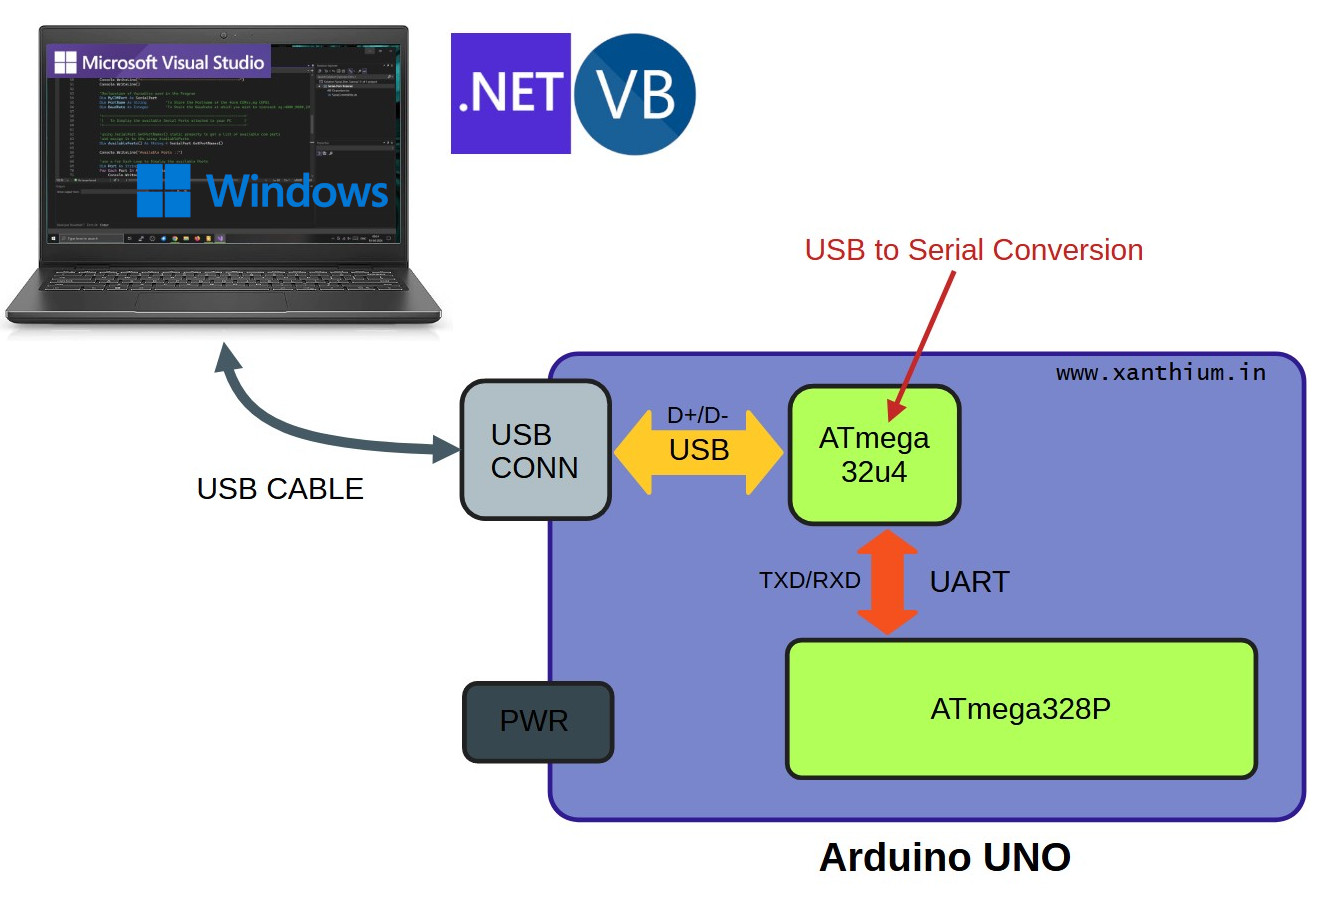 serial communication setup between ATmega328P microcontroller and Windows PC using Visual Basic.net language on .NET Platform